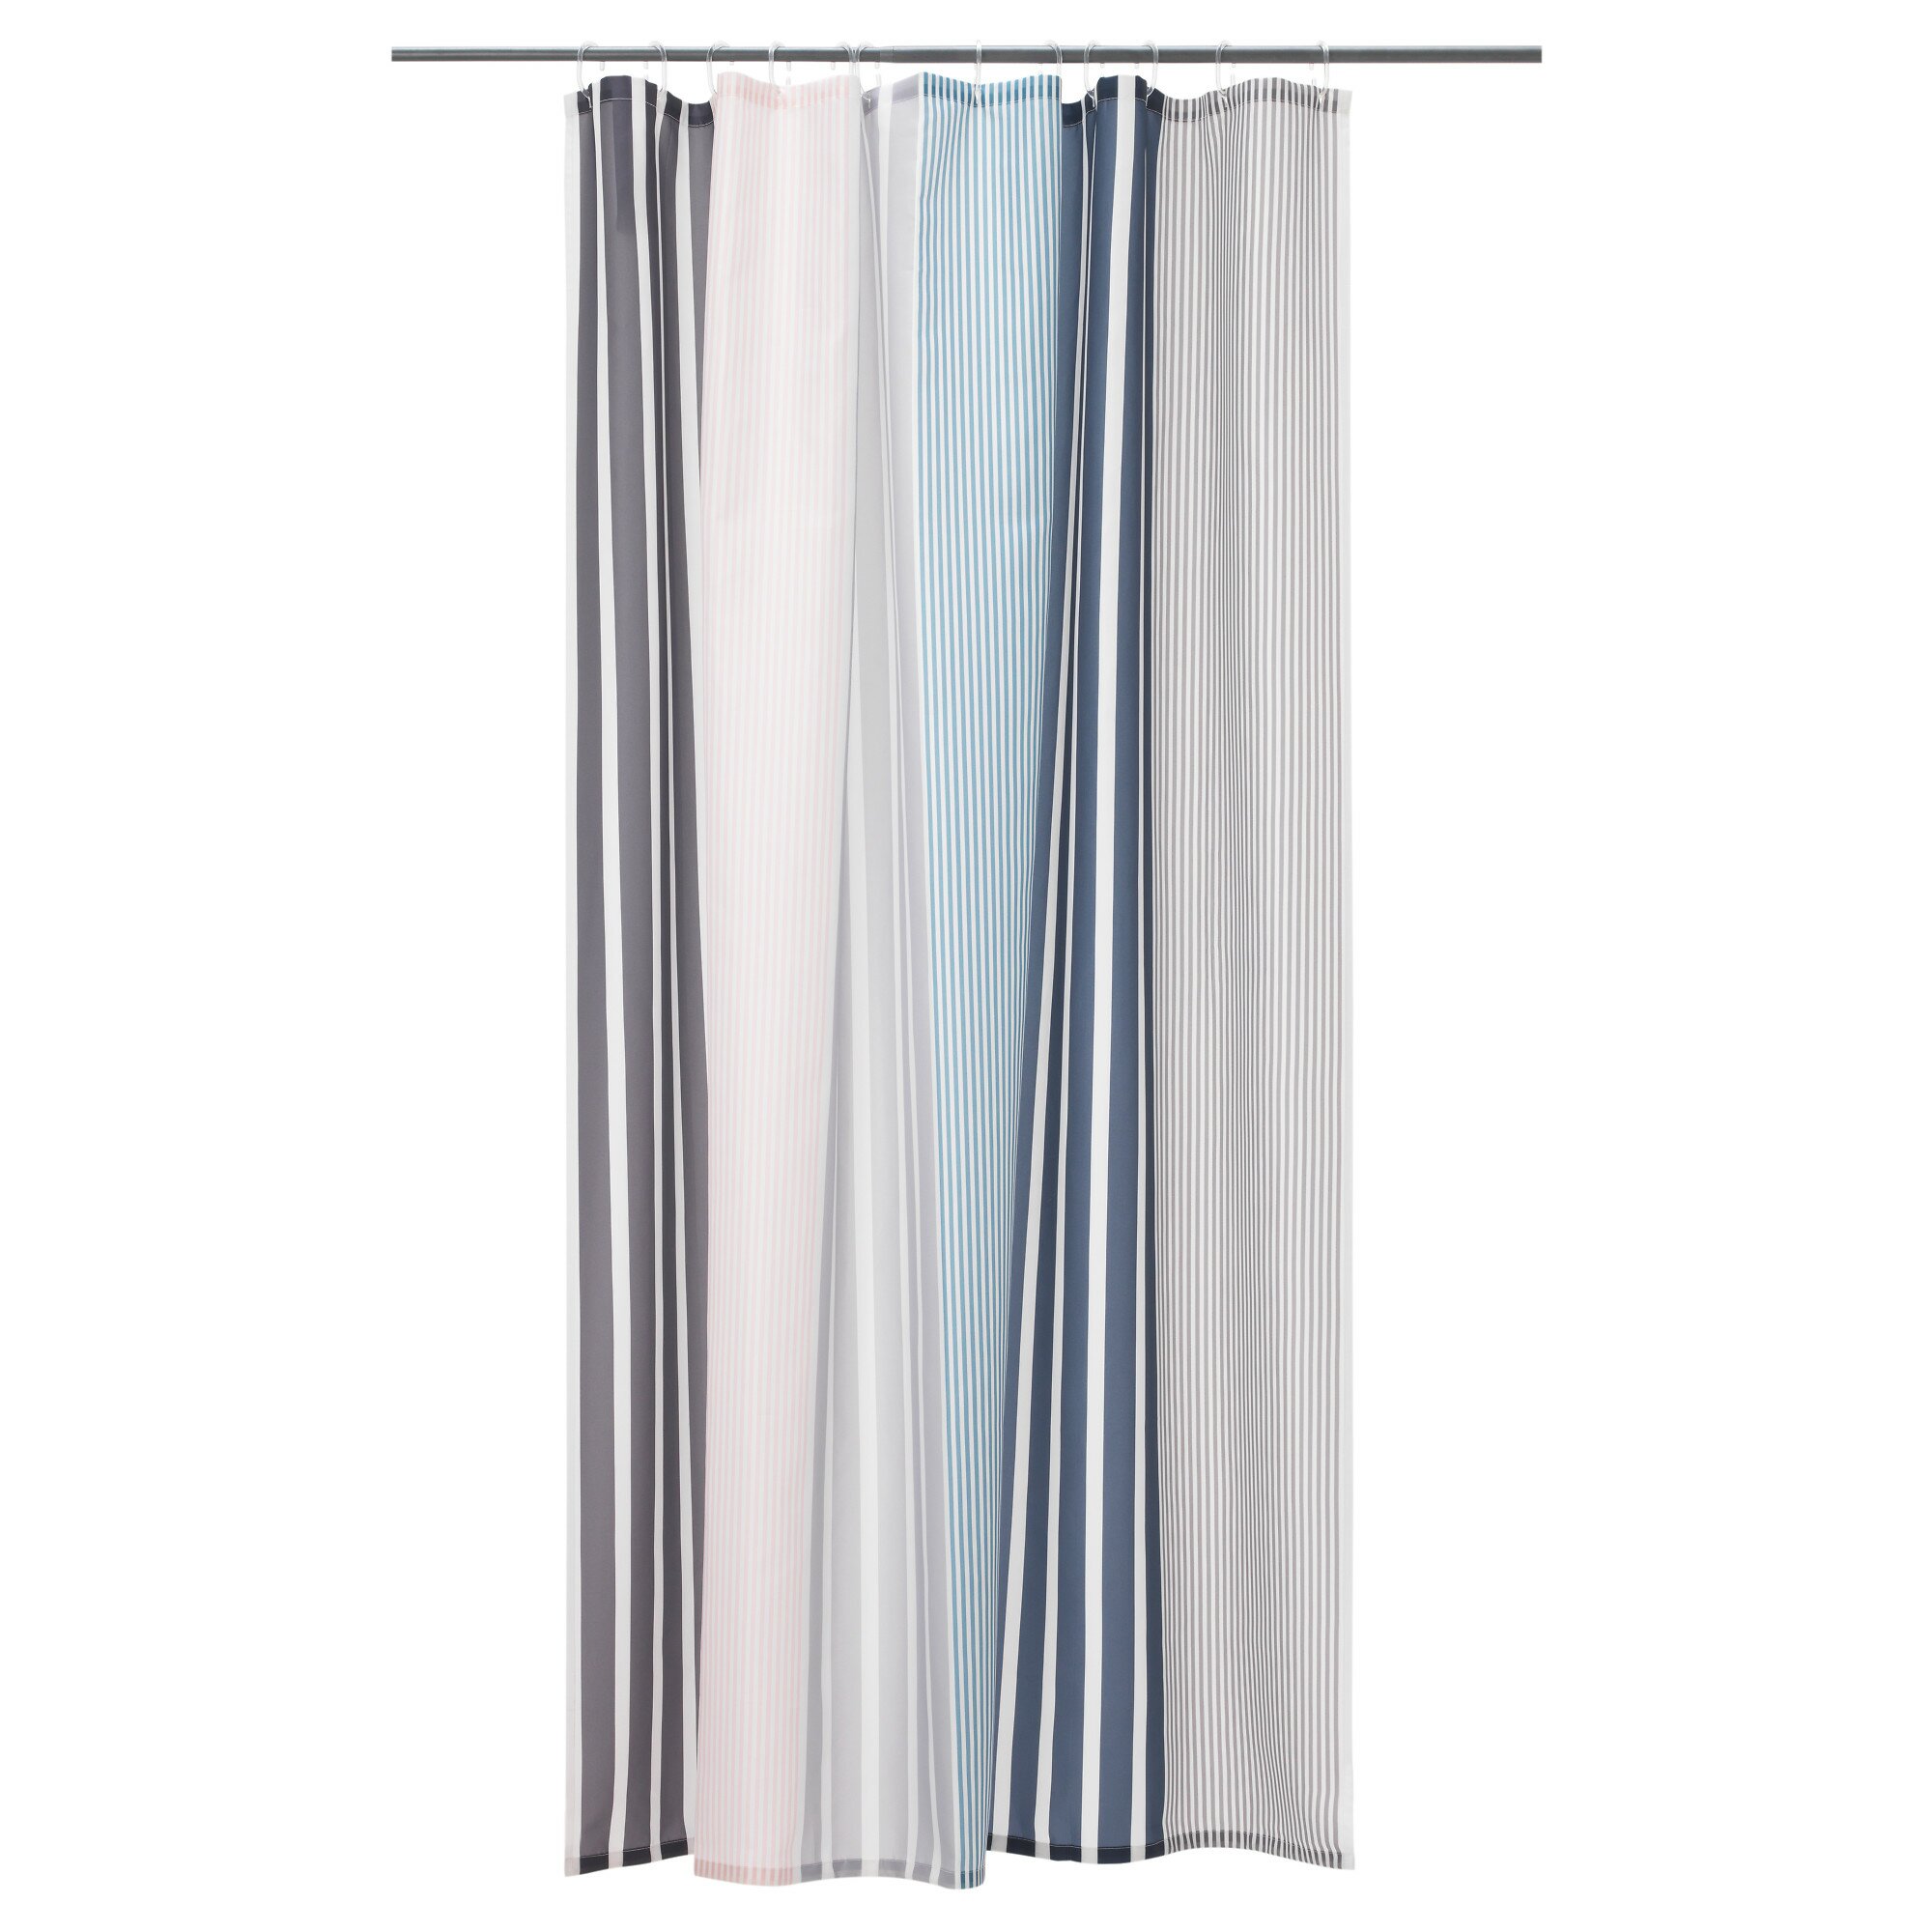 Ikea Shower Curtain for Best Your Bathroom Decoration: Ikea Shower Curtain | Seahorse Shower Curtain | Tahari Shower Curtain